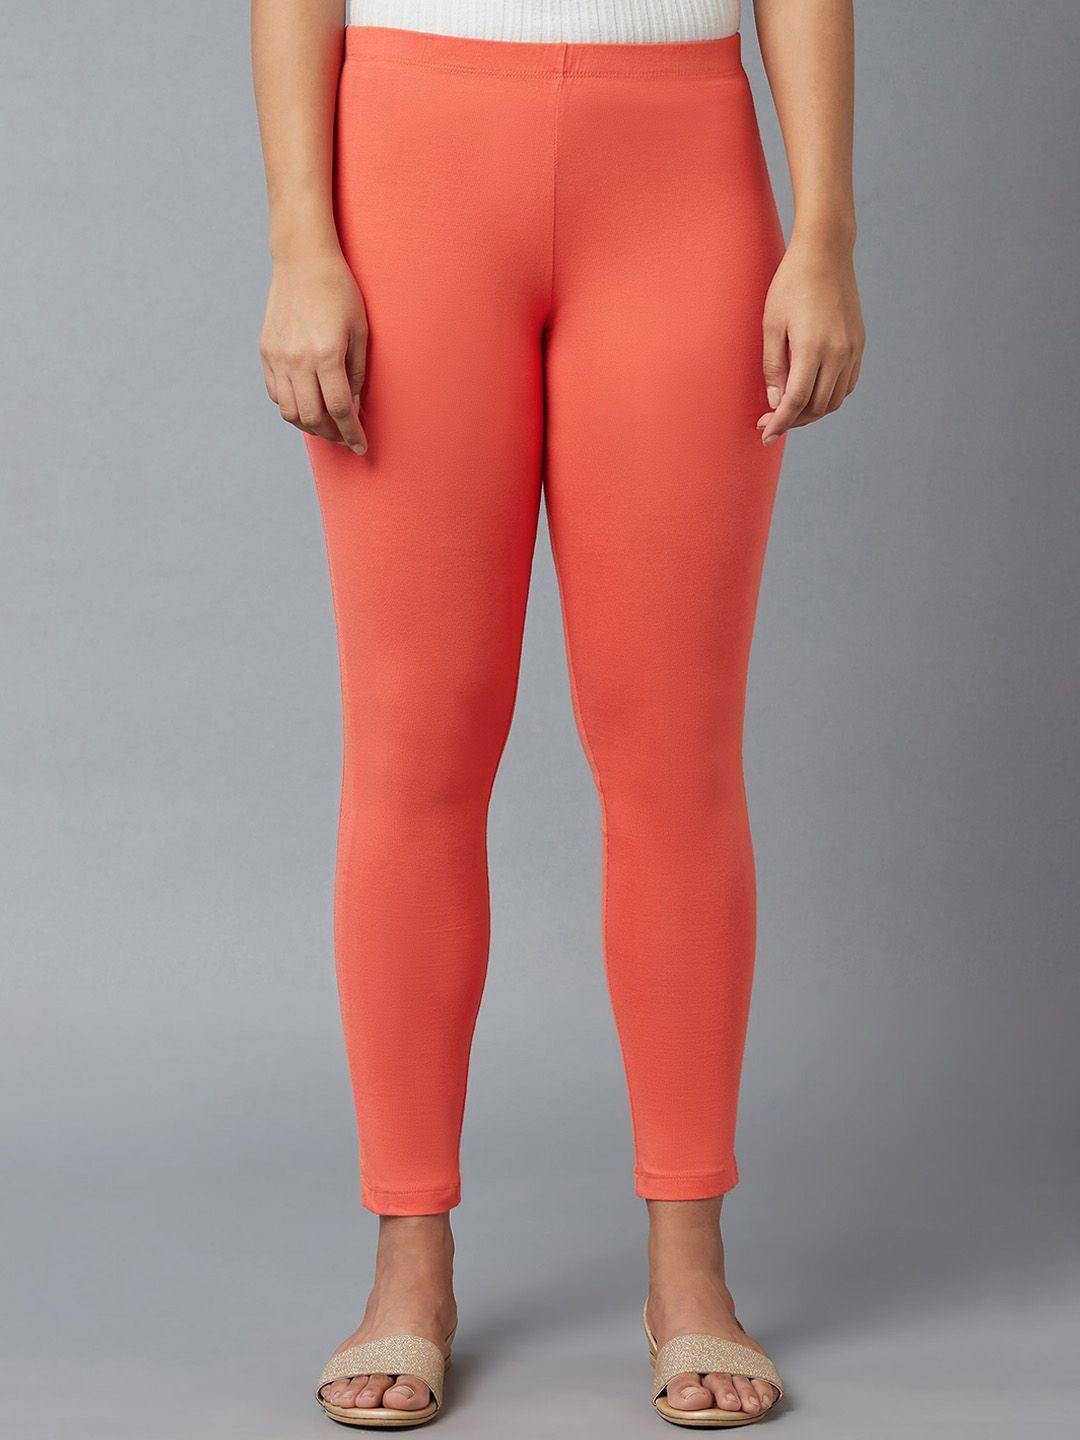 elleven women orange solid tights